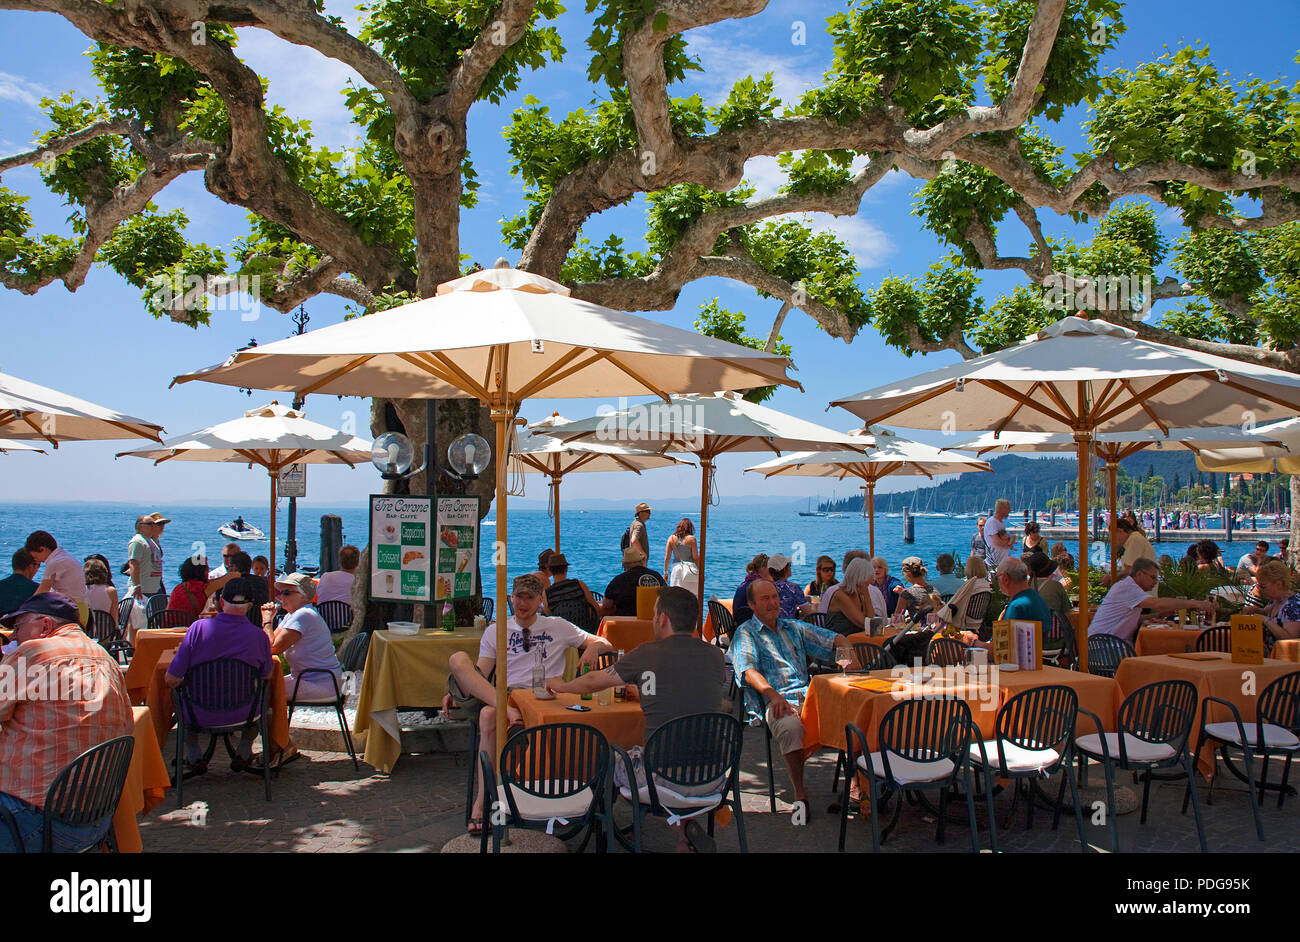 People in a Cafe at lake promenade, Garda, province Verona, Lake Garda, Italy Stock Photo